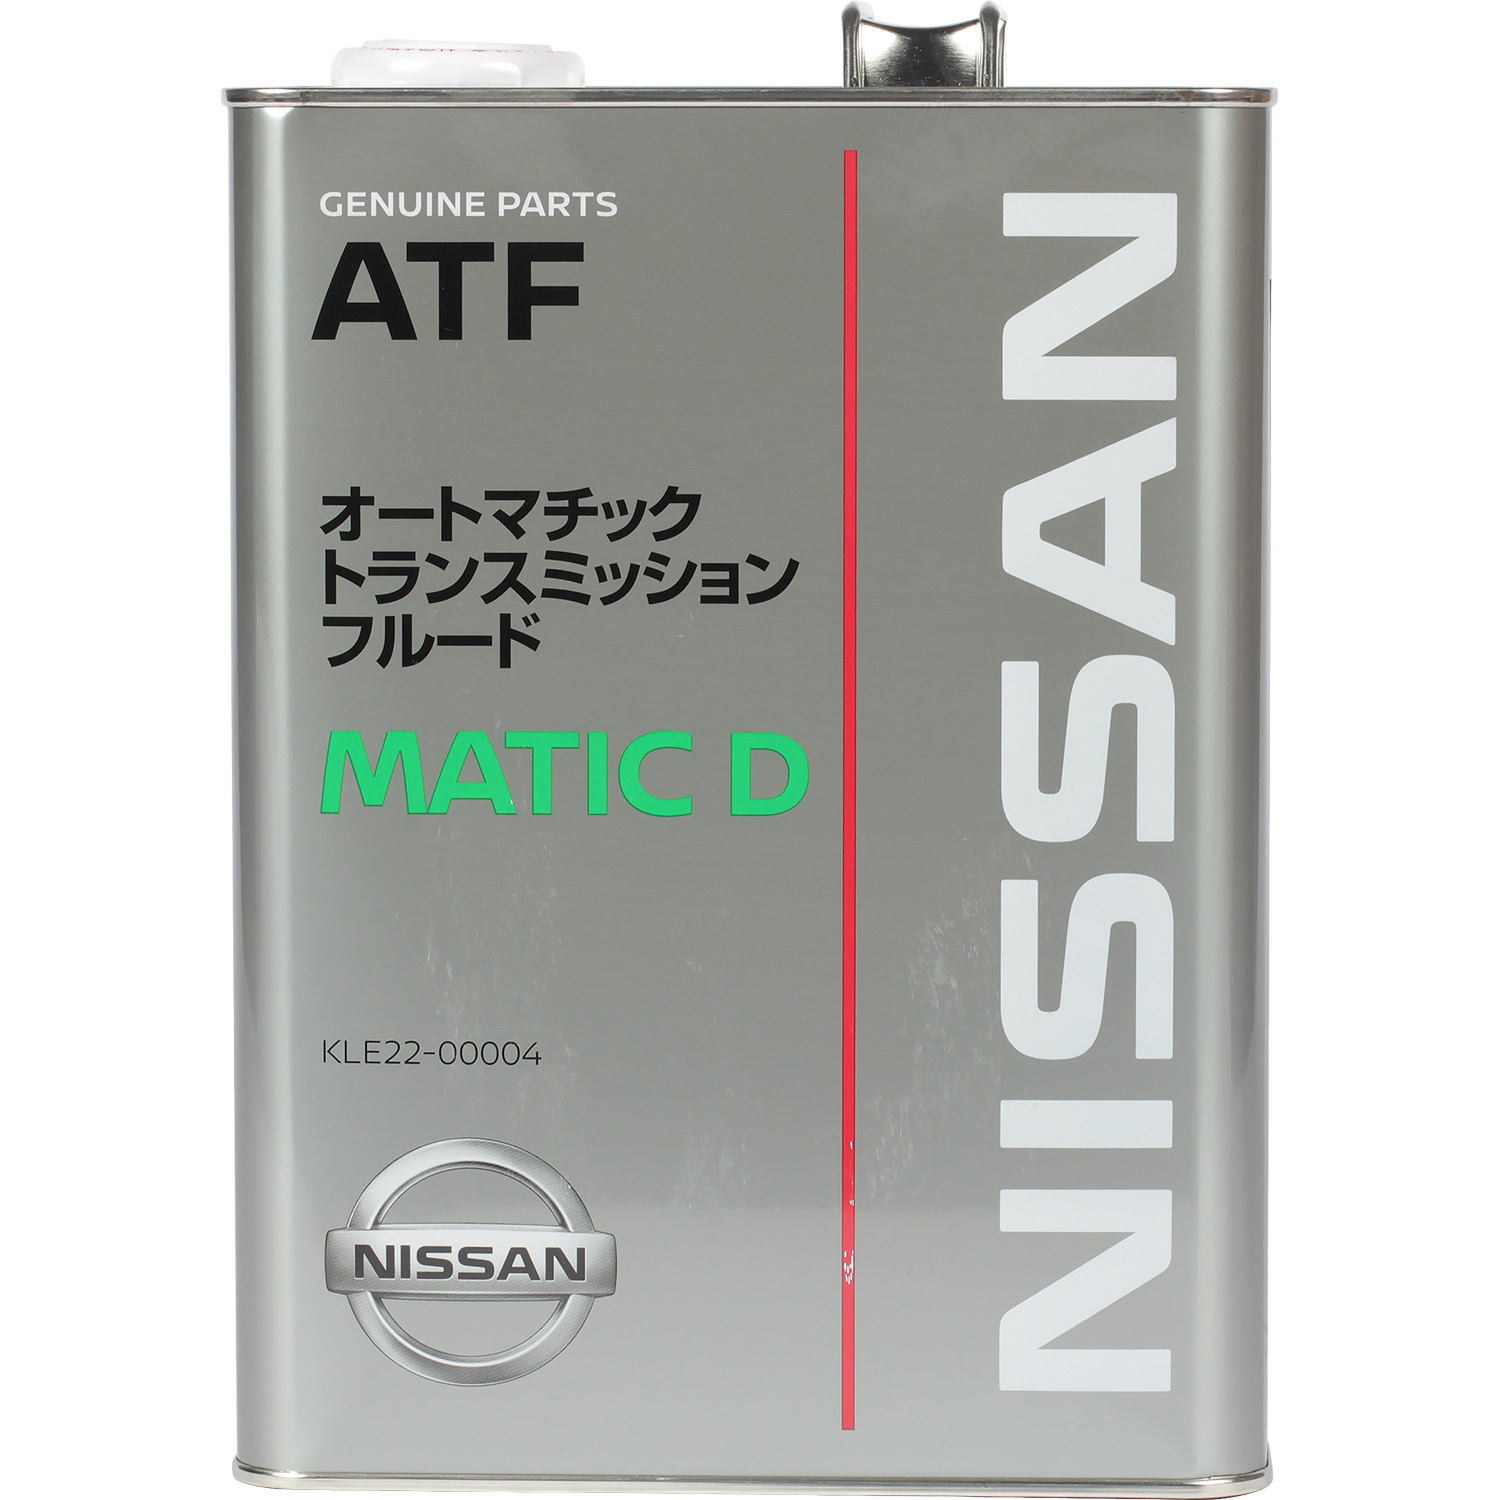 Nissan Масло трансмиссионное NISSAN MATIC FLUID D 4л (art.KLE2200004) корпус шагового клапана трансмиссии jf010e re0f09a re0f09b cvt подходит для nissan altima maxima murano